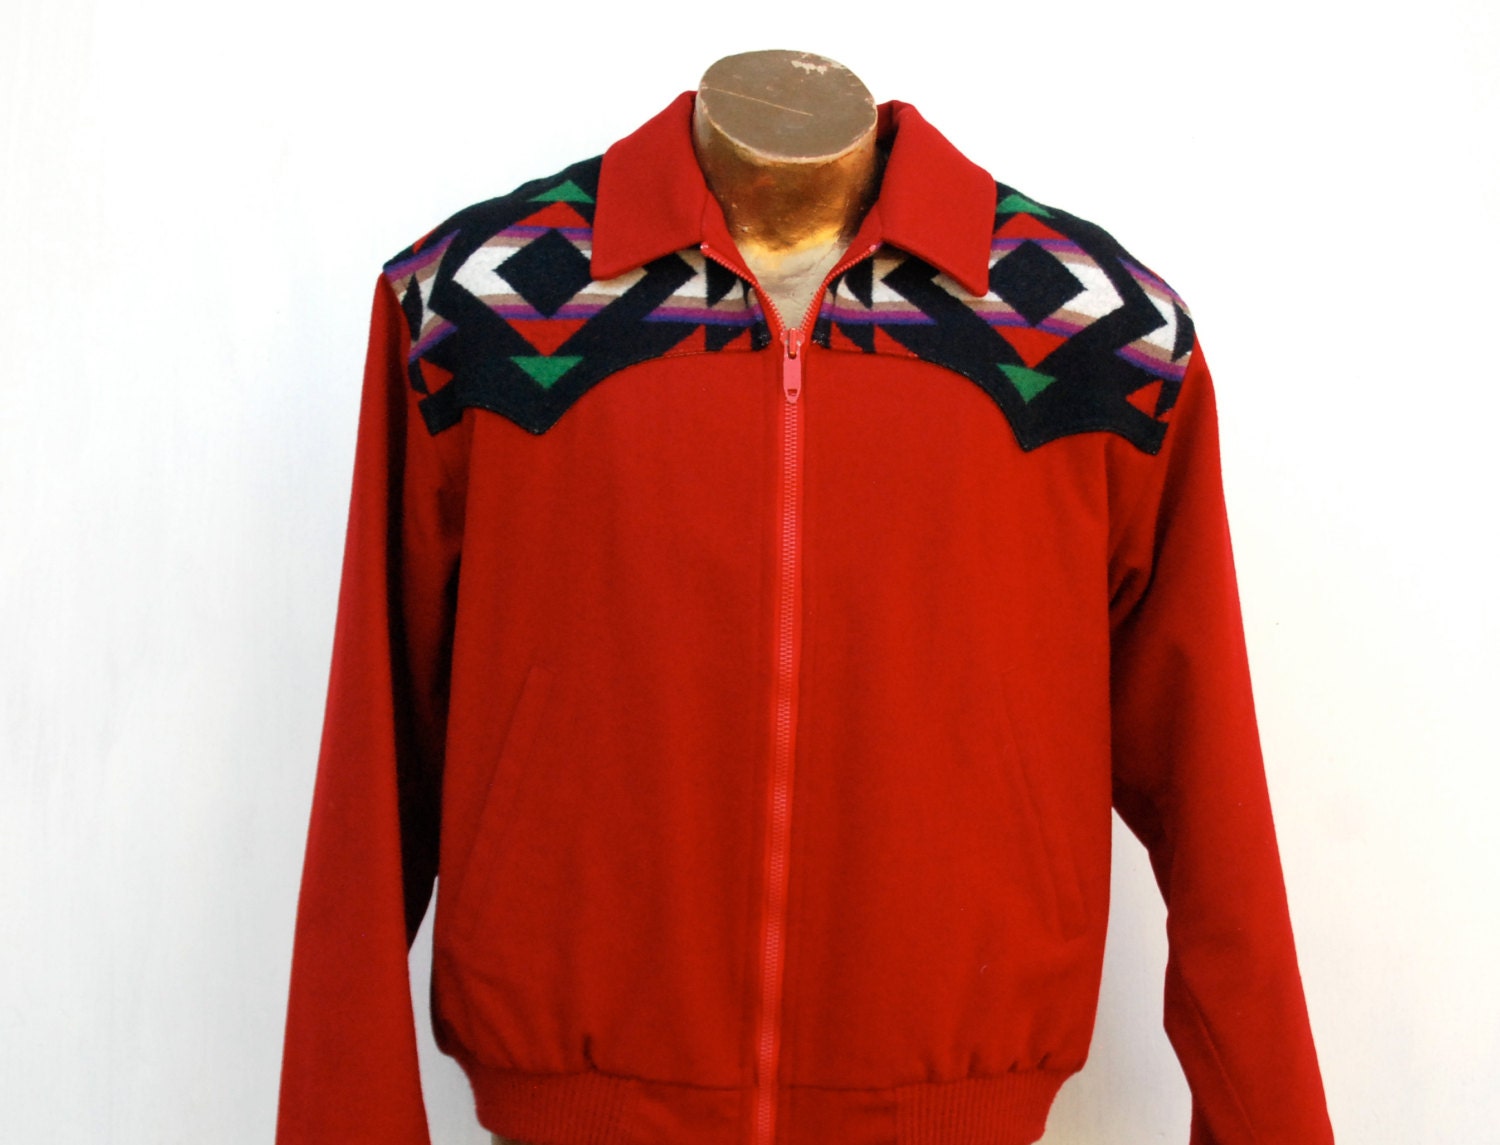 Men's pendleton jacket red wool in tribal Navajo design